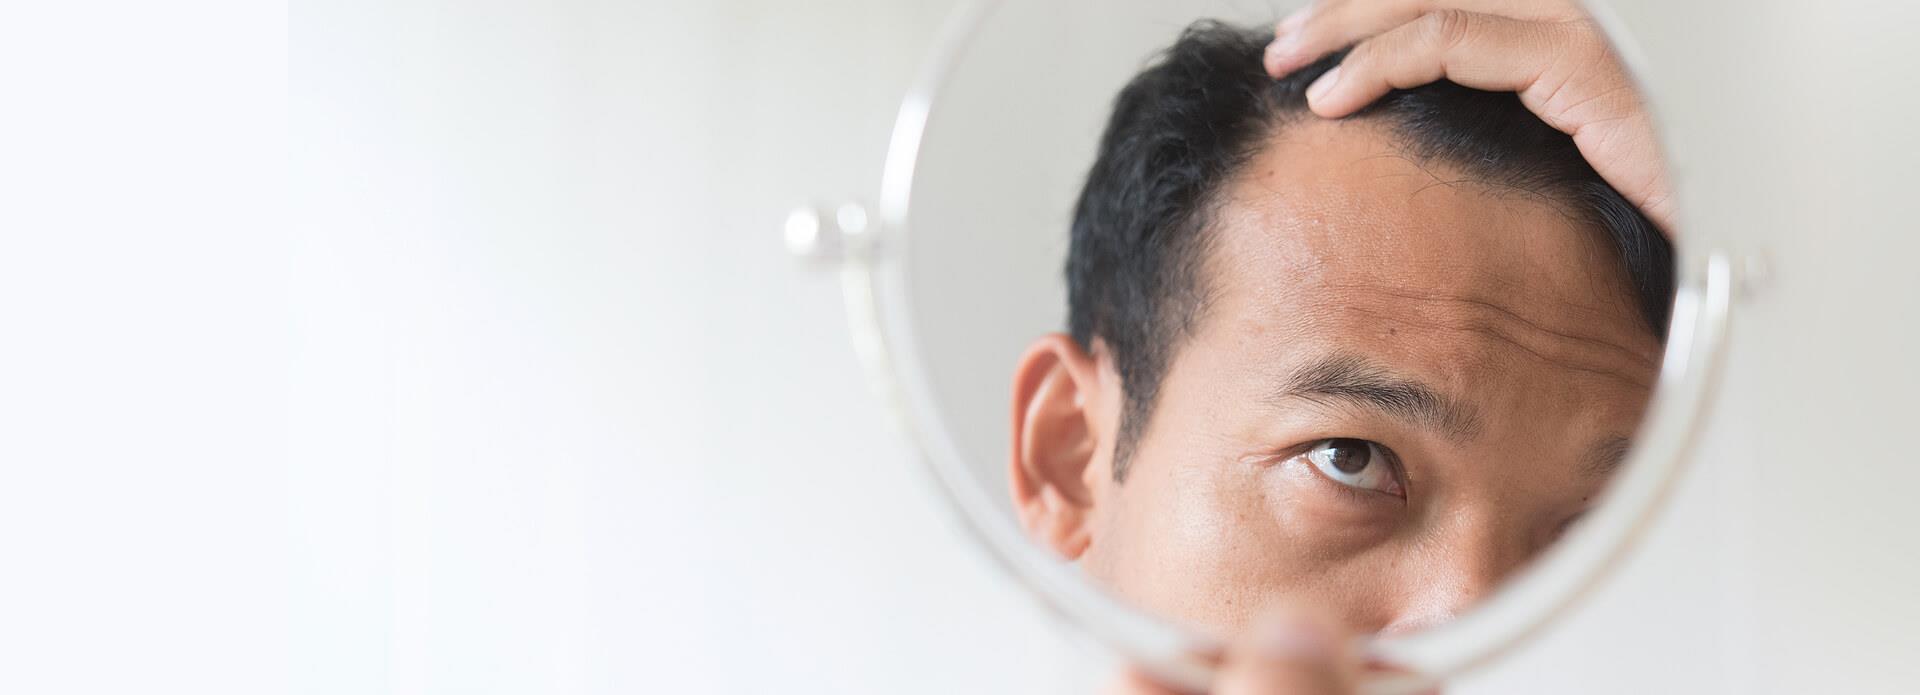 Bespoke Treatments for Hair Loss